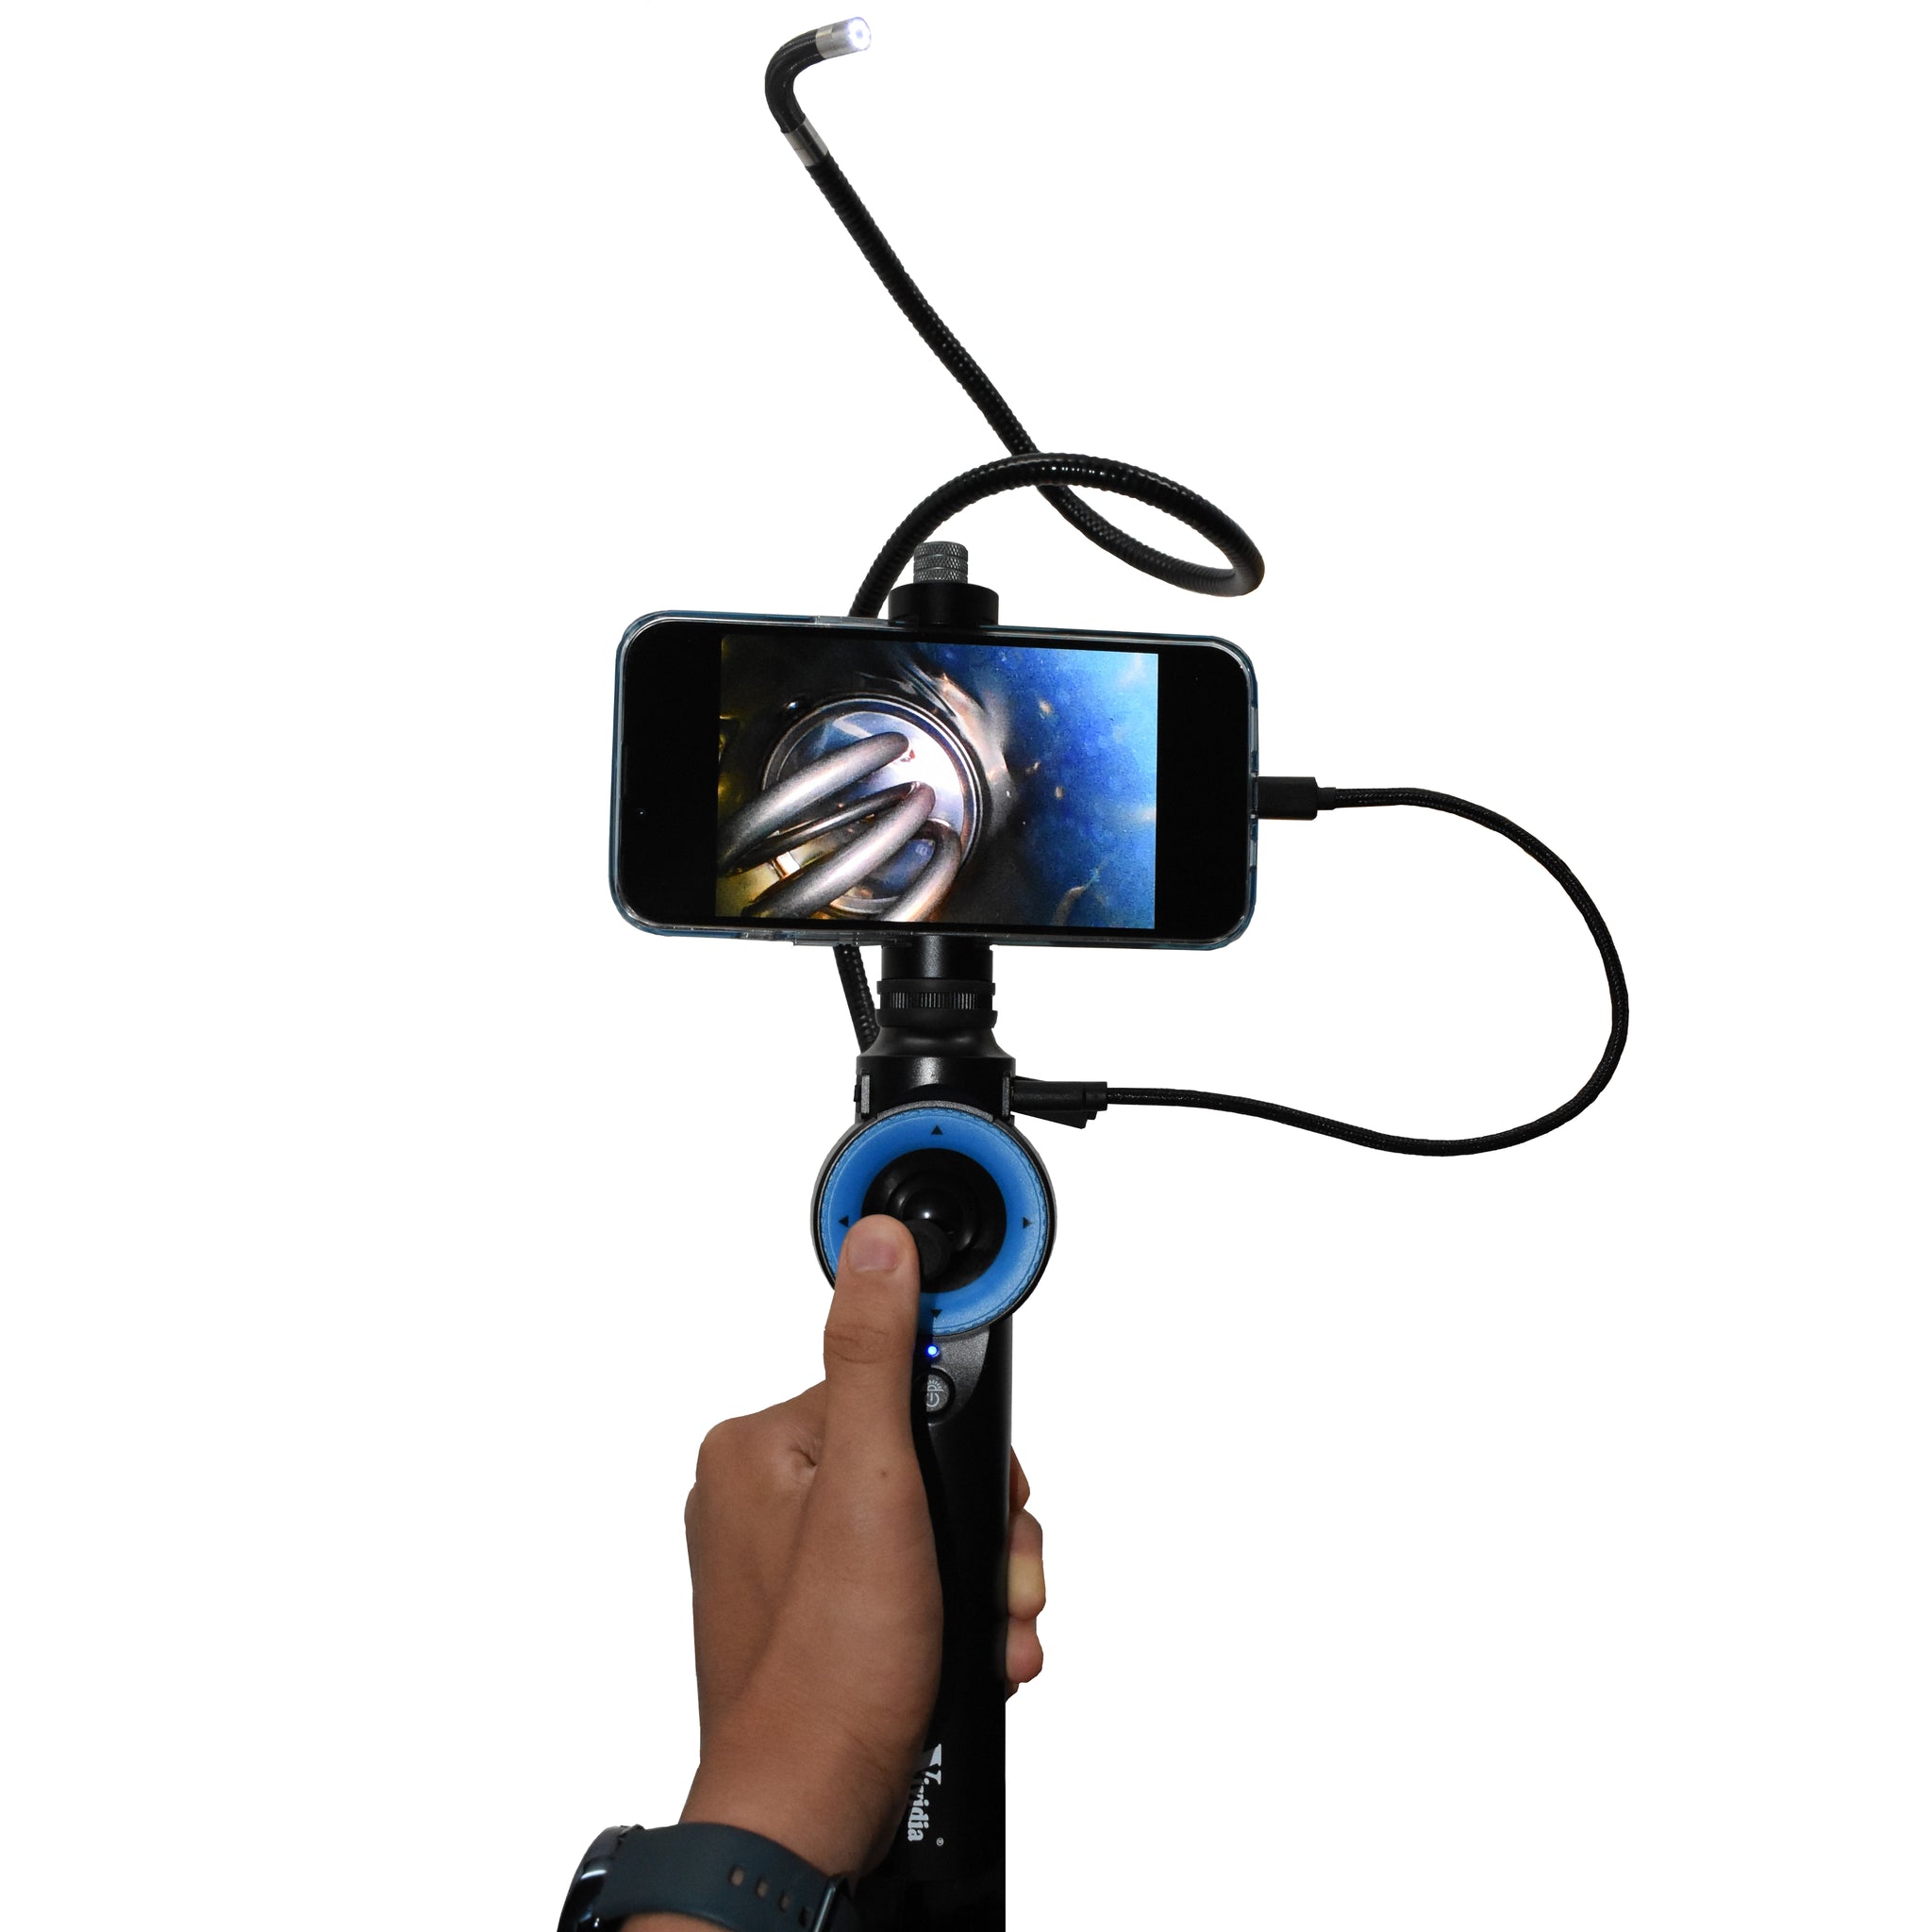 Vividia WiFi Wireless 9mm Waterproof Flexible Inspection Camera Borescope  Endoscope for iPhone/iPad/Android